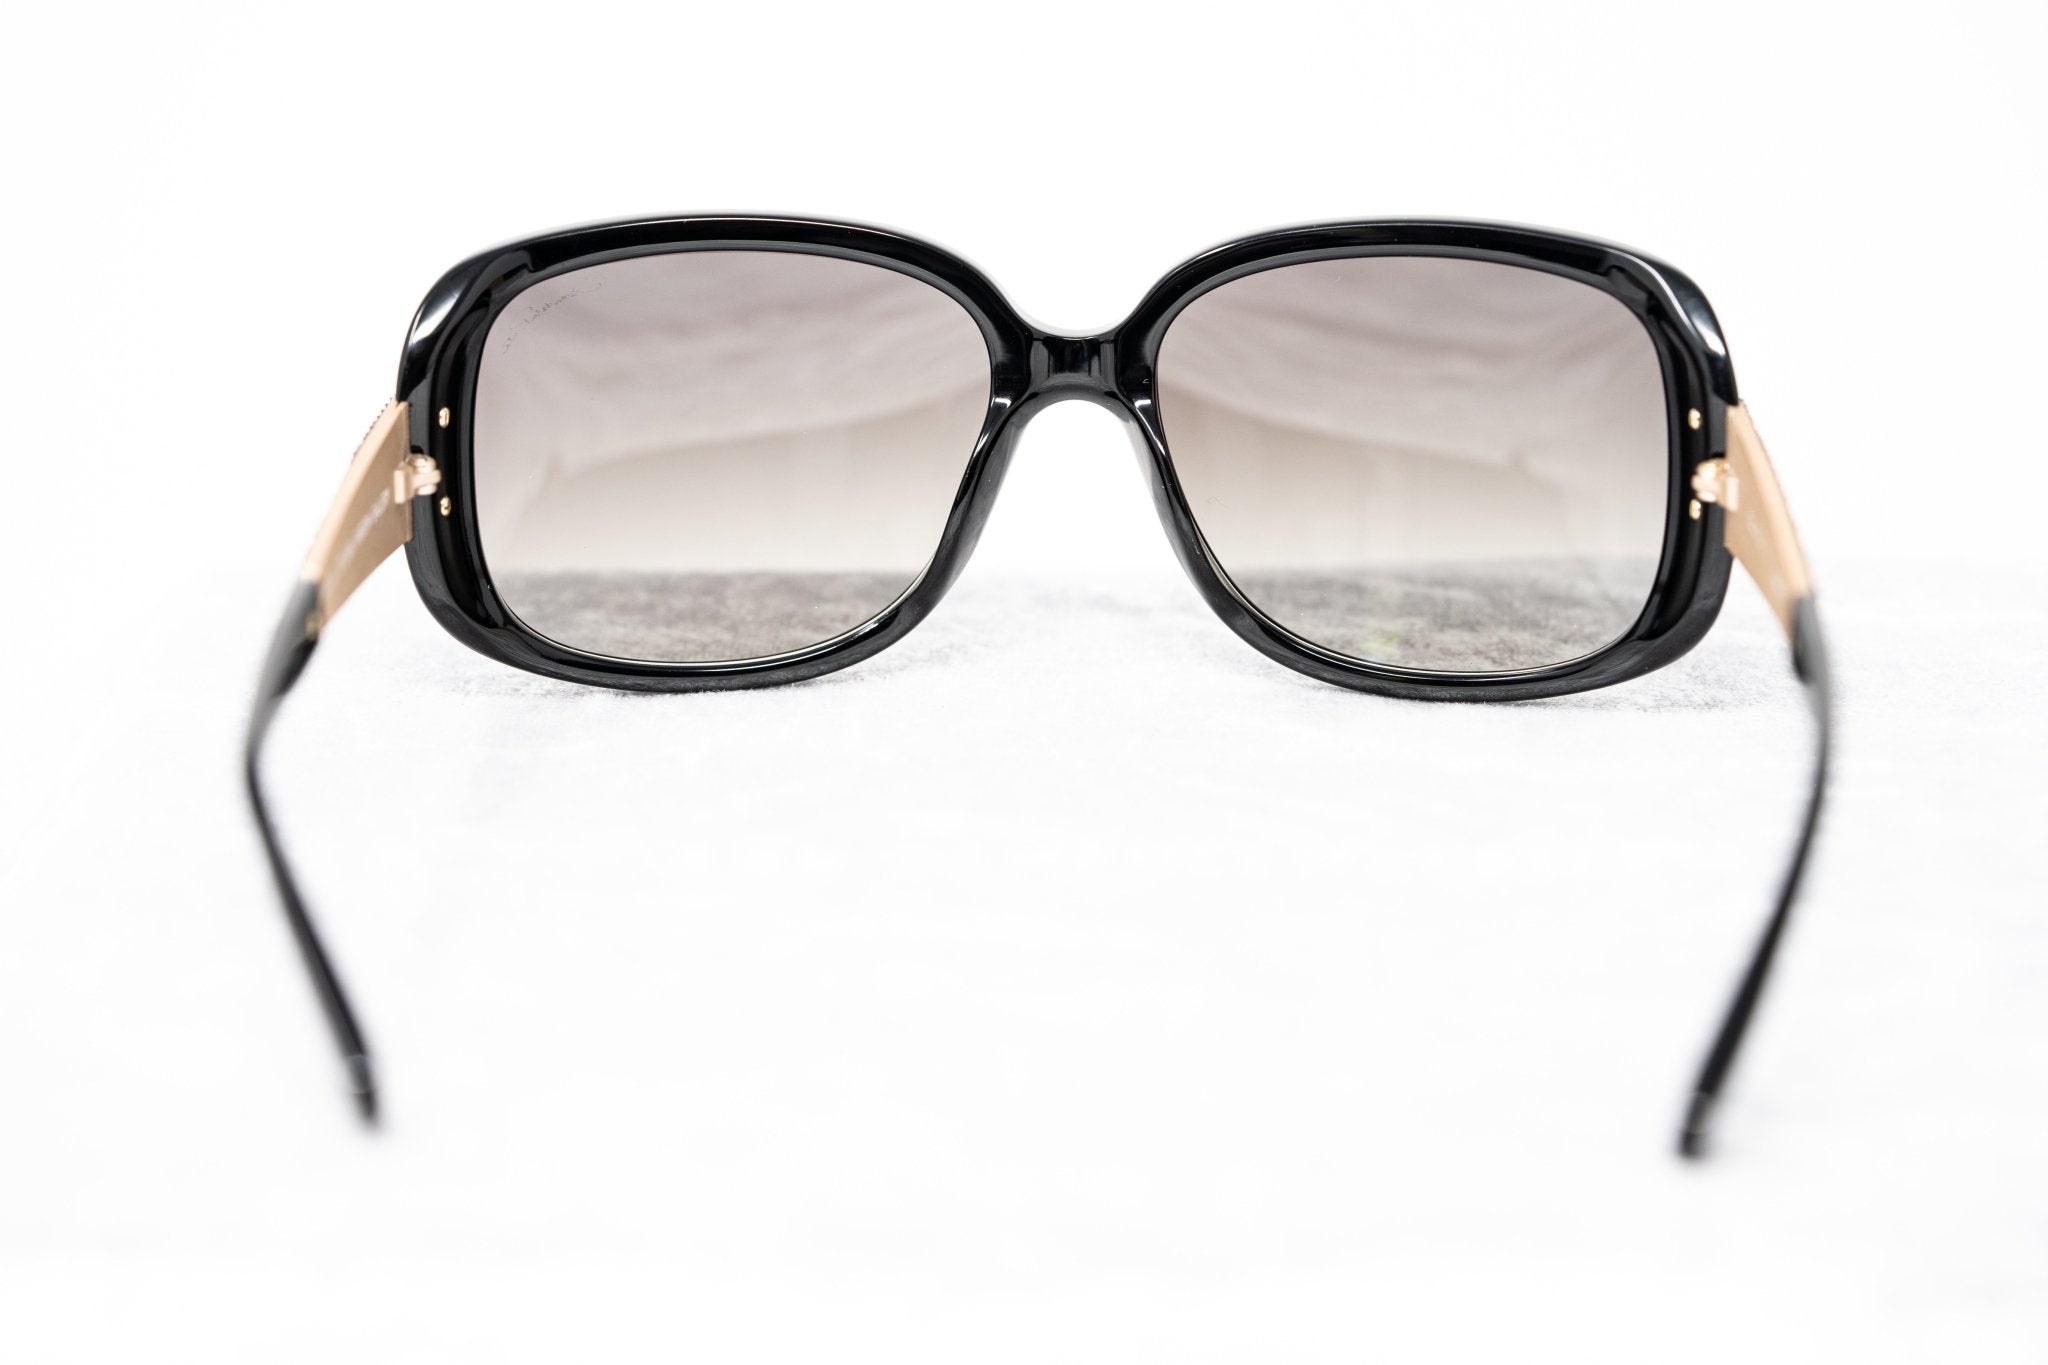 Oscar De La Renta Women Sunglasses Crystals Oversized Frame Black and Grey Graduated Lenses - ODLR64C1SUN - Watches & Crystals